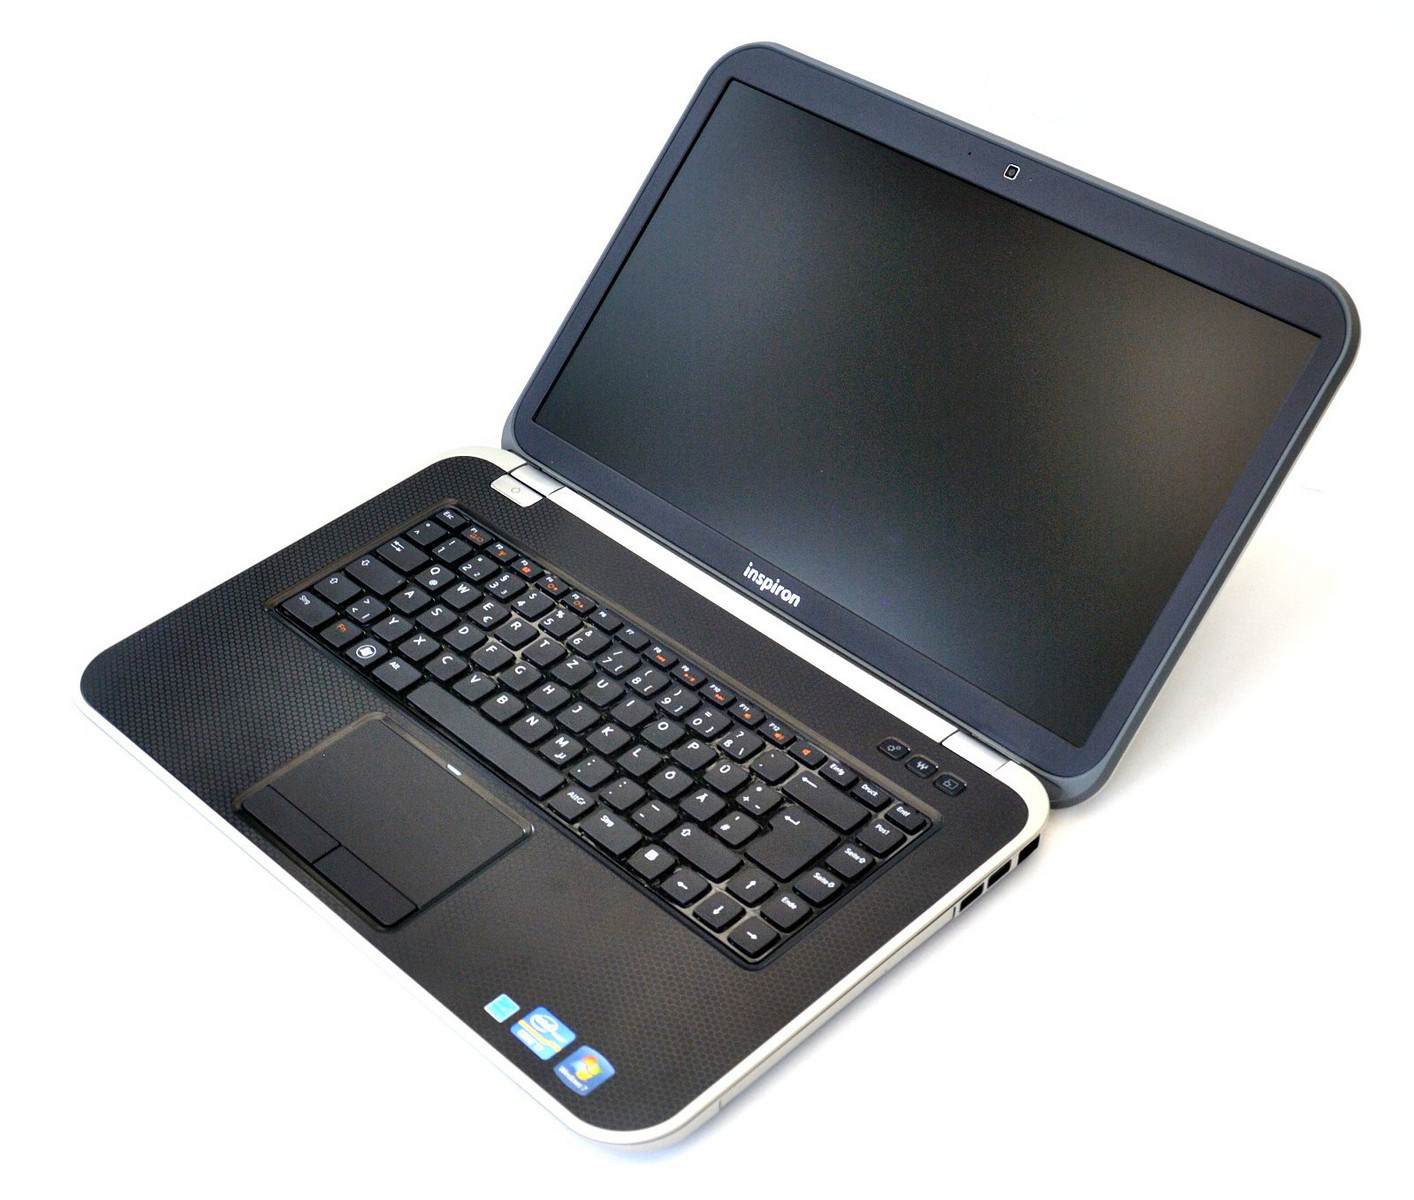 Dell Inspiron 15R SE Series - Notebookcheck.net External Reviews